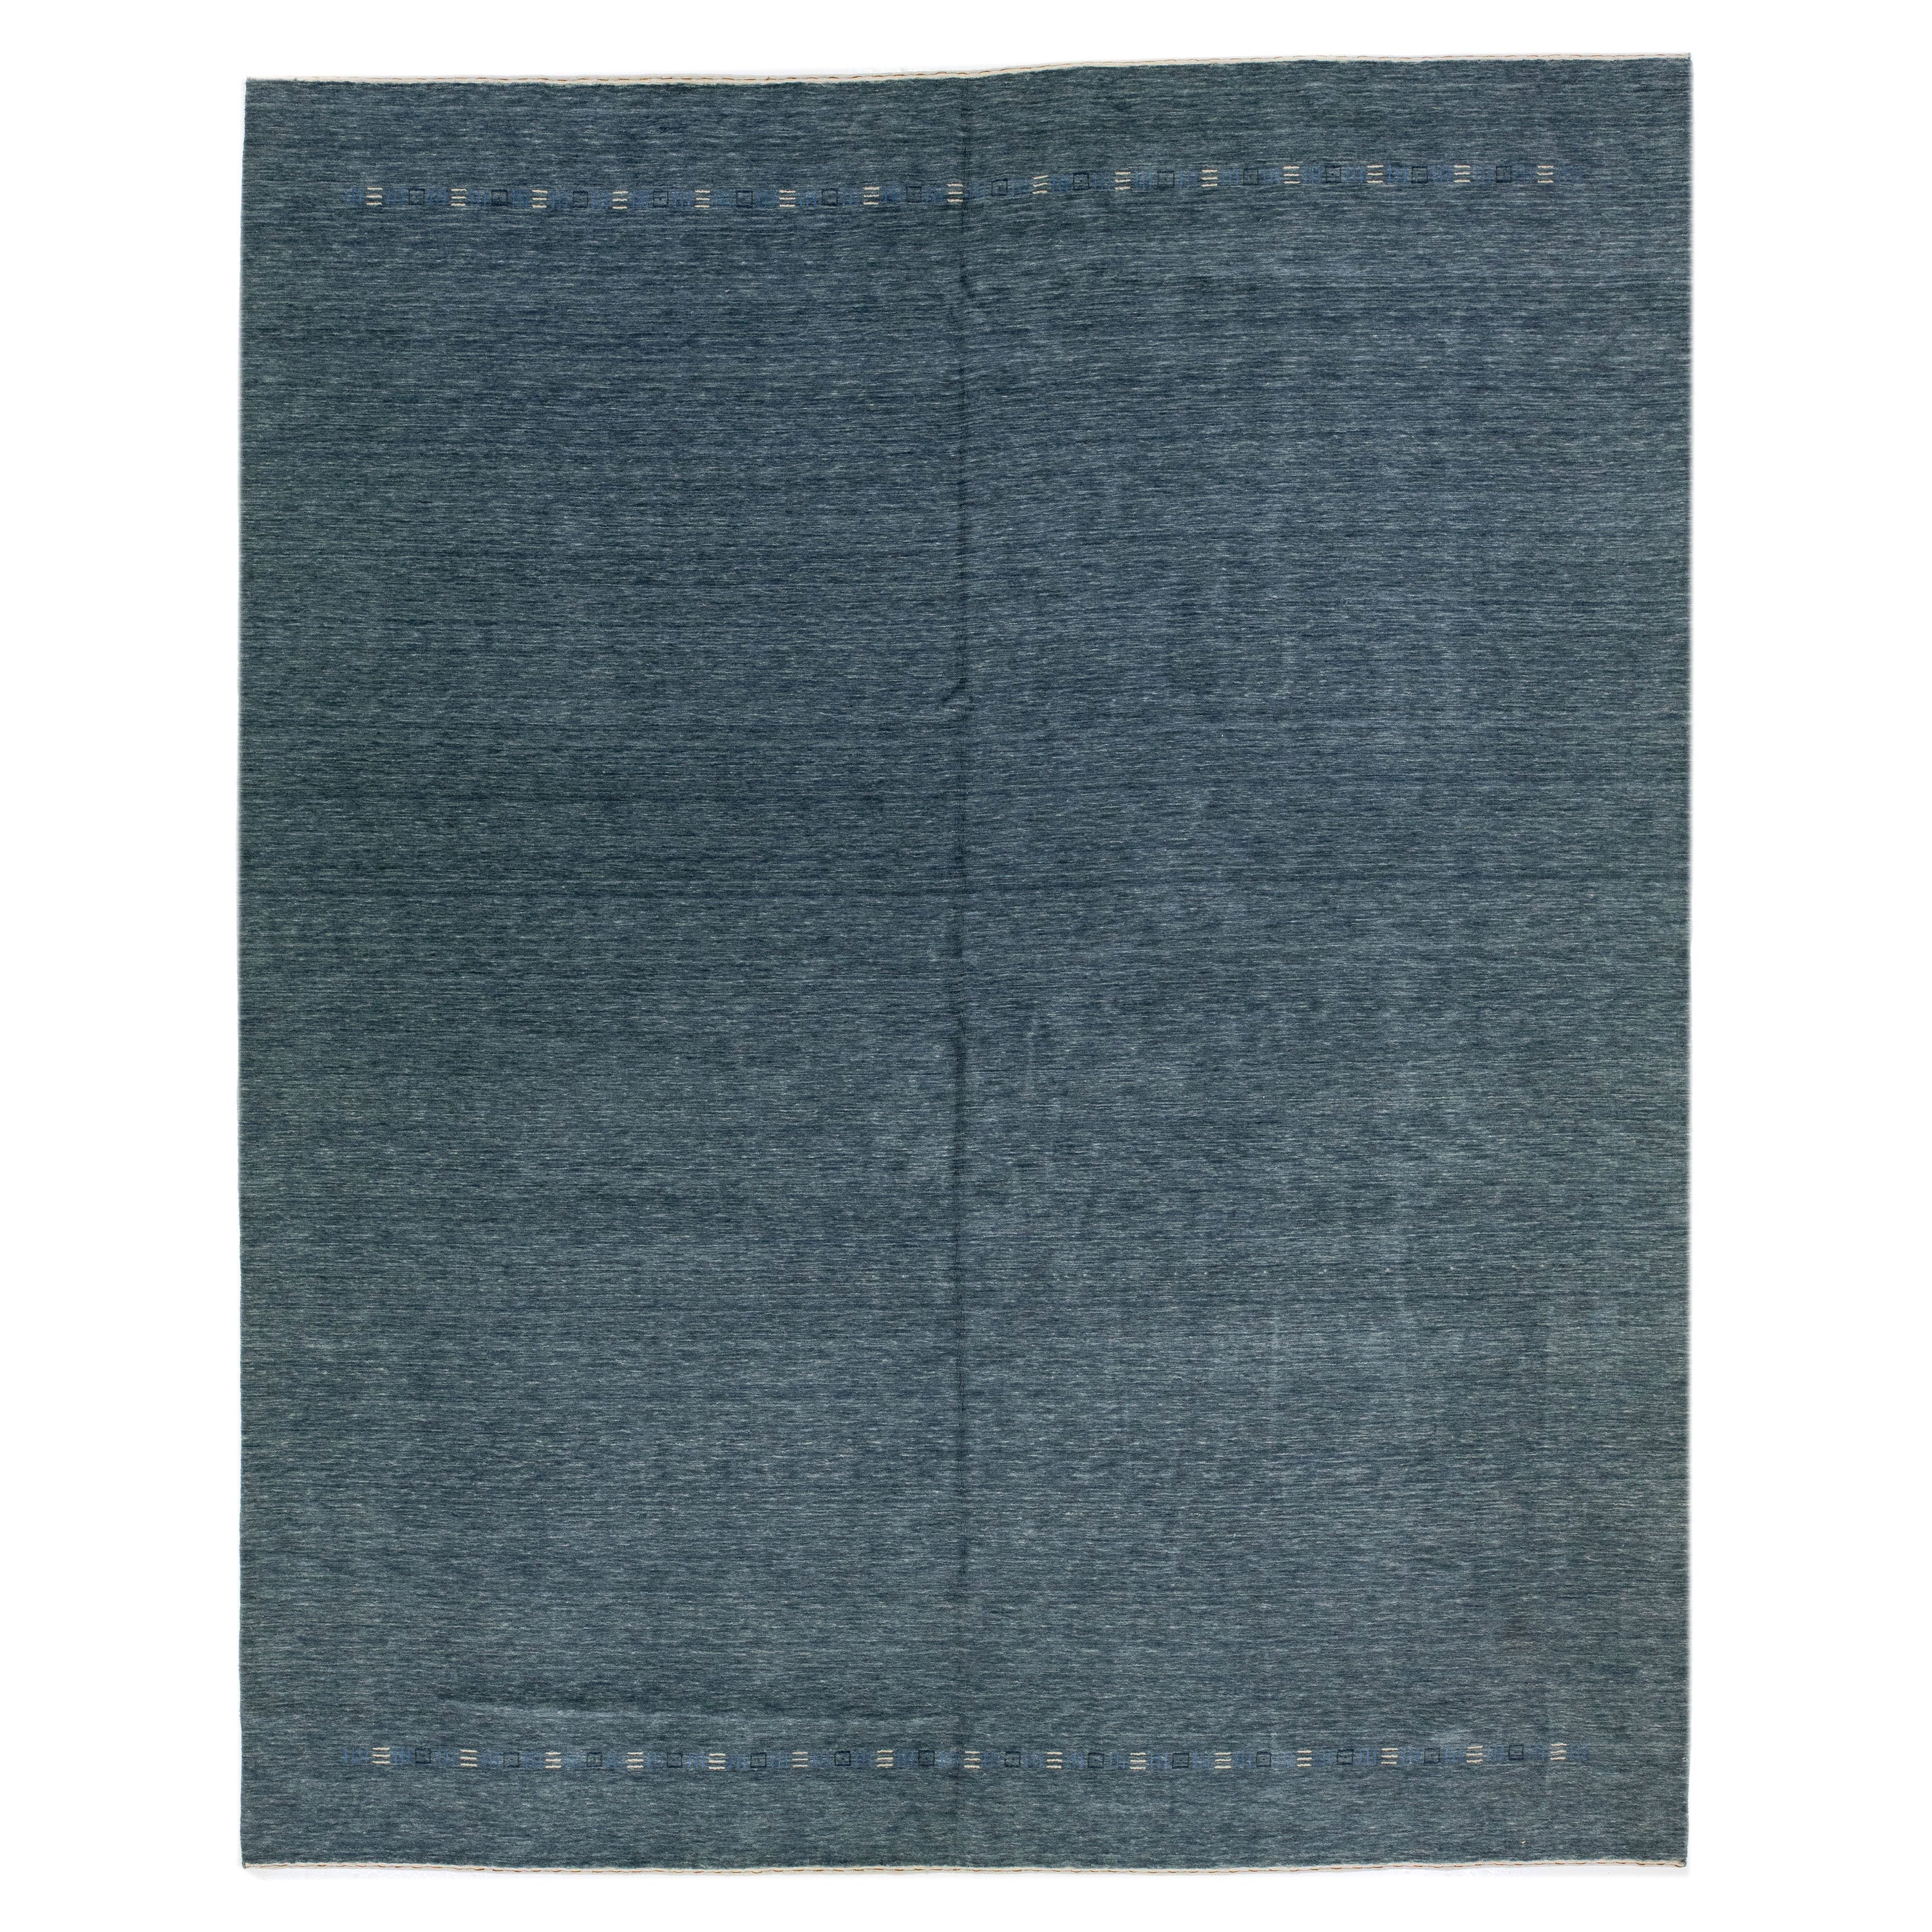 Blue Modern Gabbeh Style Wool Rug with Minimalist Design 